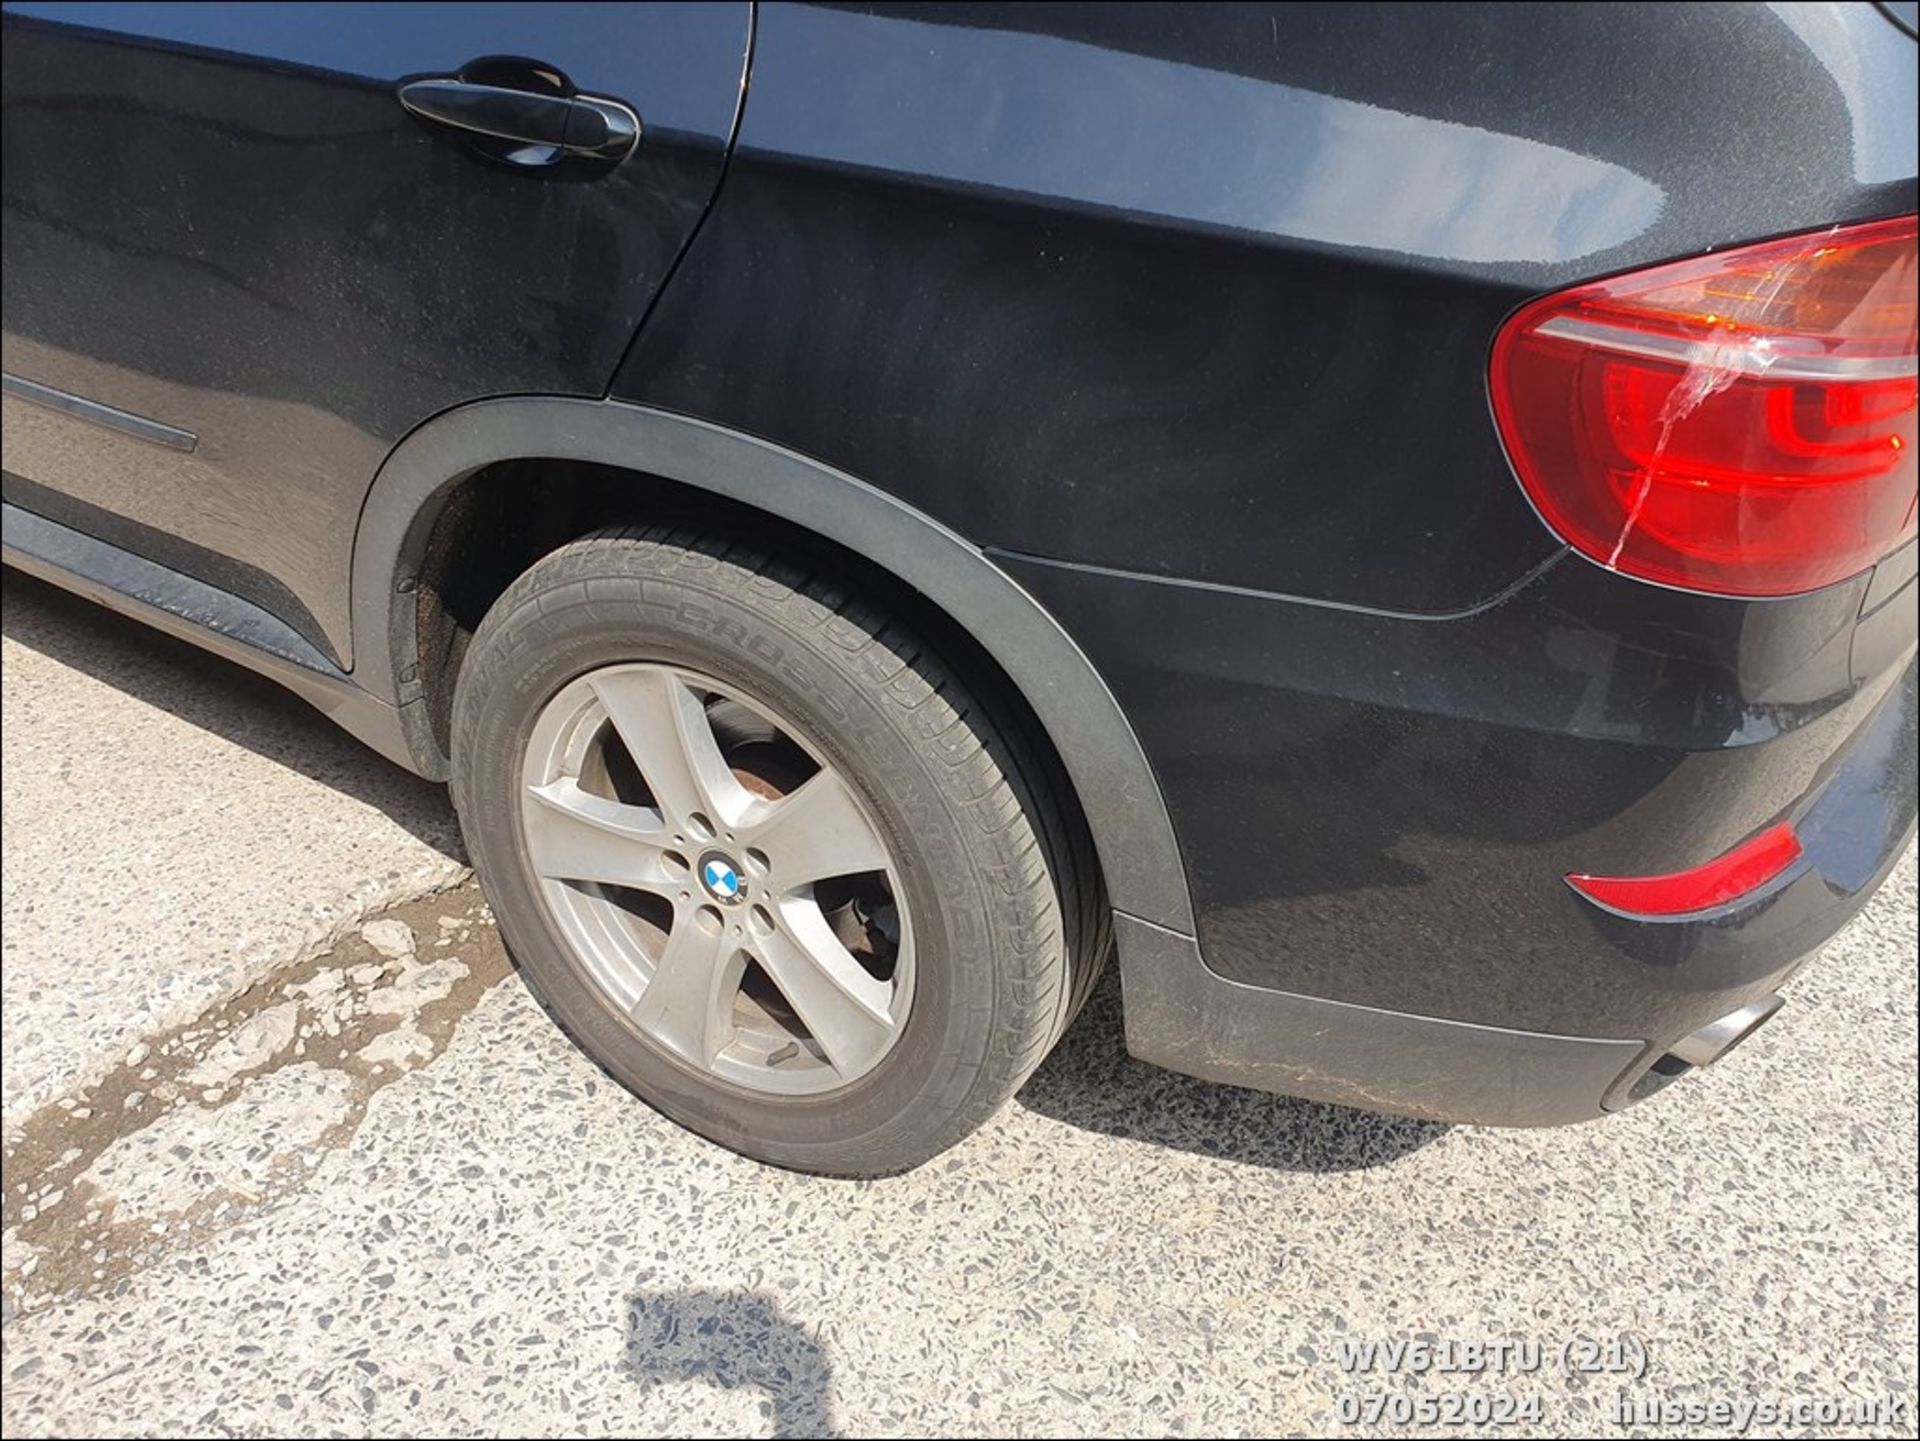 11/61 BMW X5 XDRIVE30D SE AUTO - 2993cc 5dr Estate (Black, 86k) - Image 22 of 41